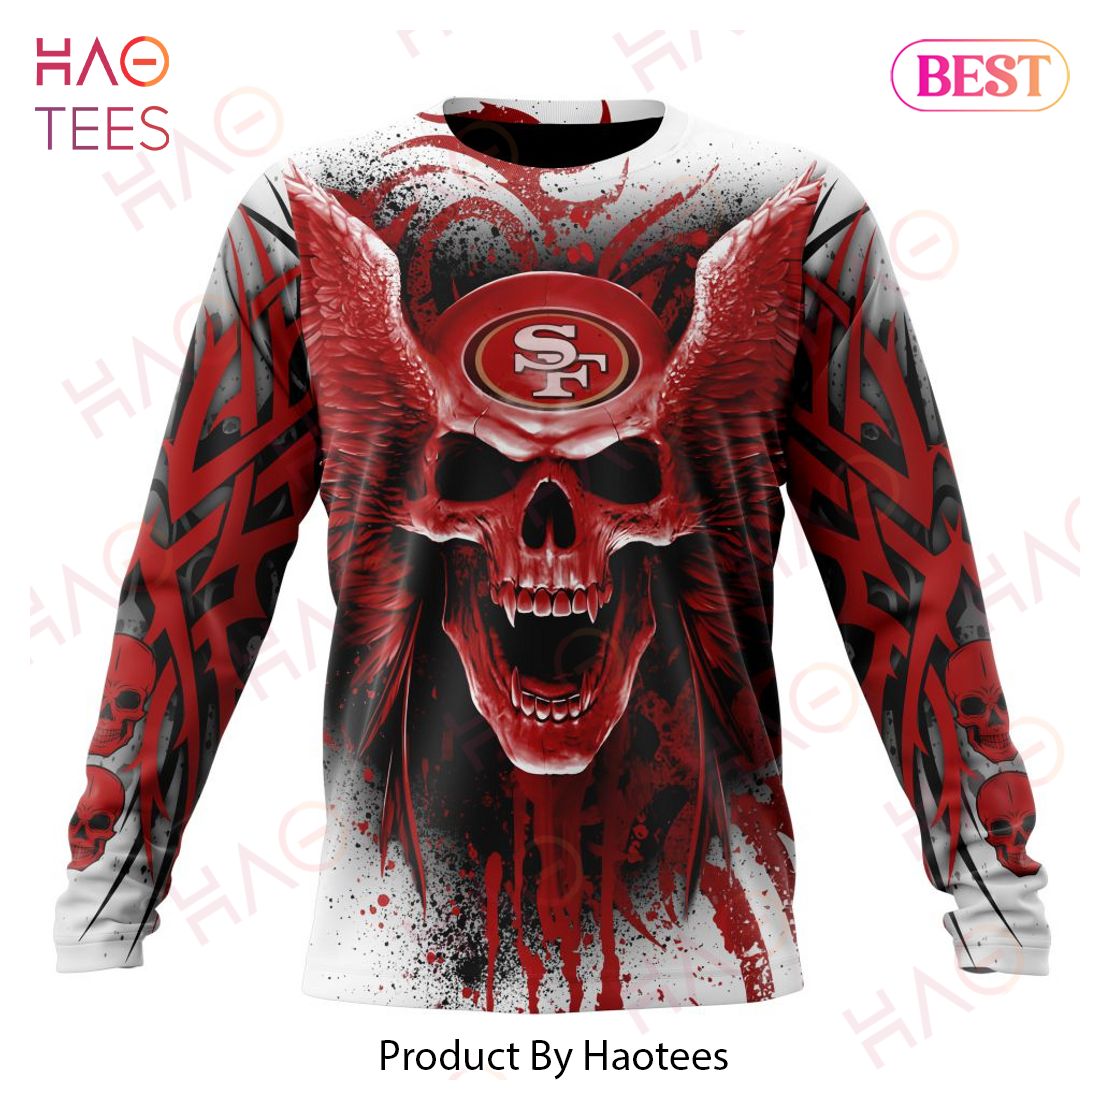 San Francisco 49Ers Nfl Football Pattern San Francisco 49Ers 3D Hoodie -  Peto Rugs